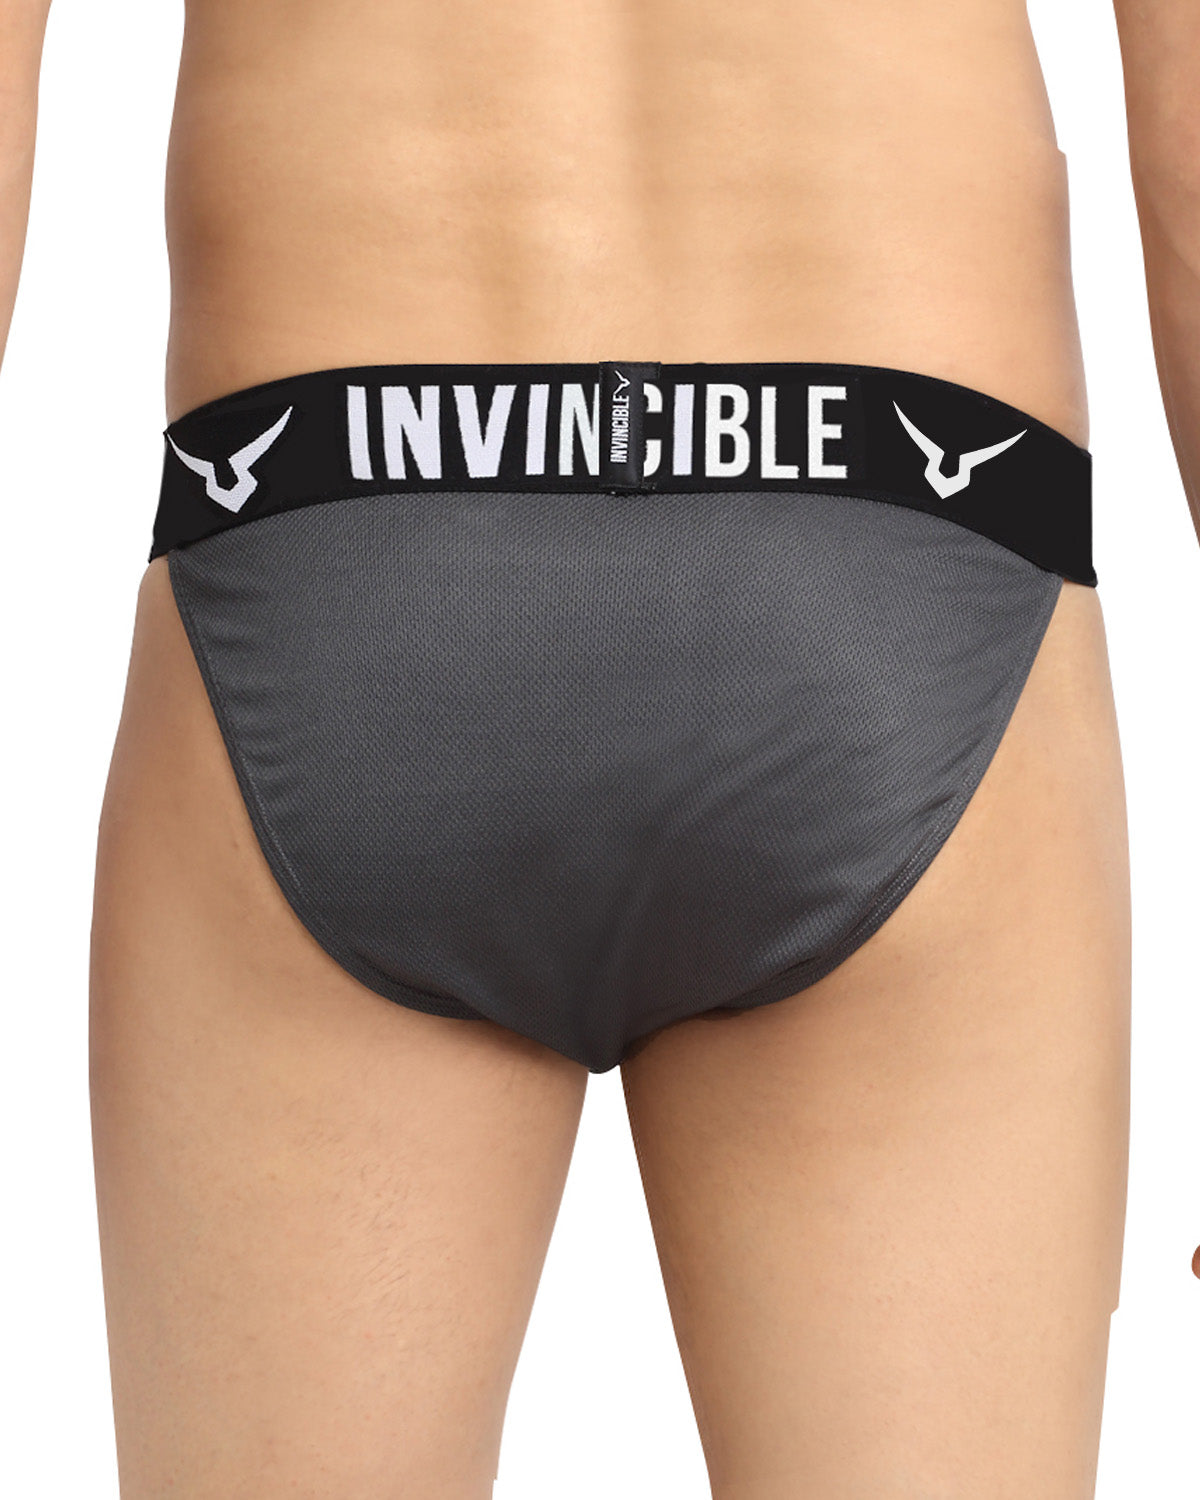 Invincible Men's Premium Covered Back Supporter/Jockstrap